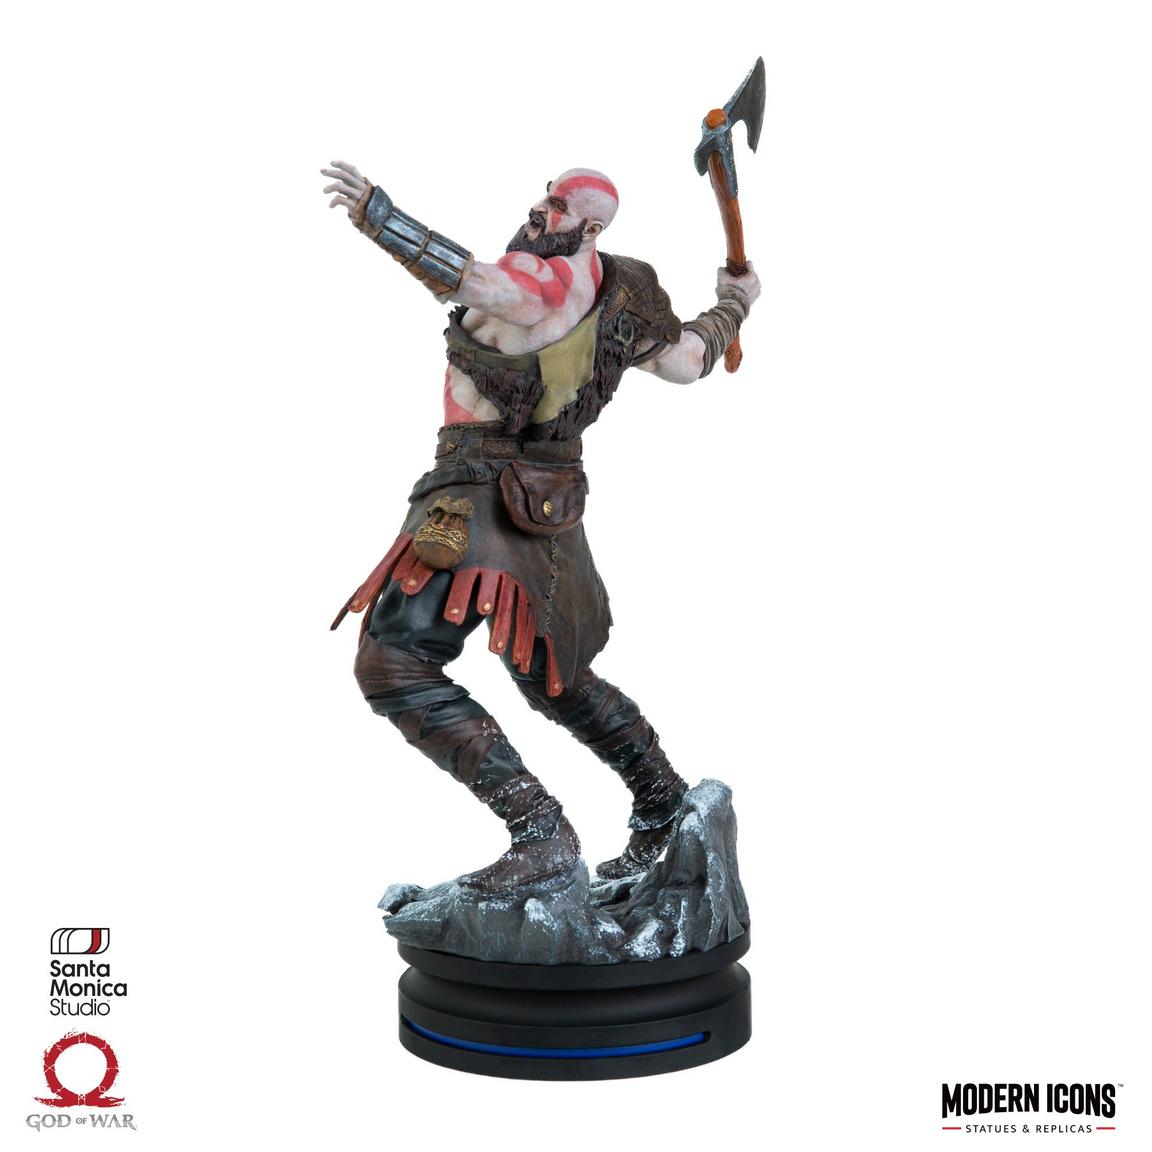 Modern-Icons-God-of-War-Kratos-Modern-Icon-Statue-GameStop-Exclusive (2)